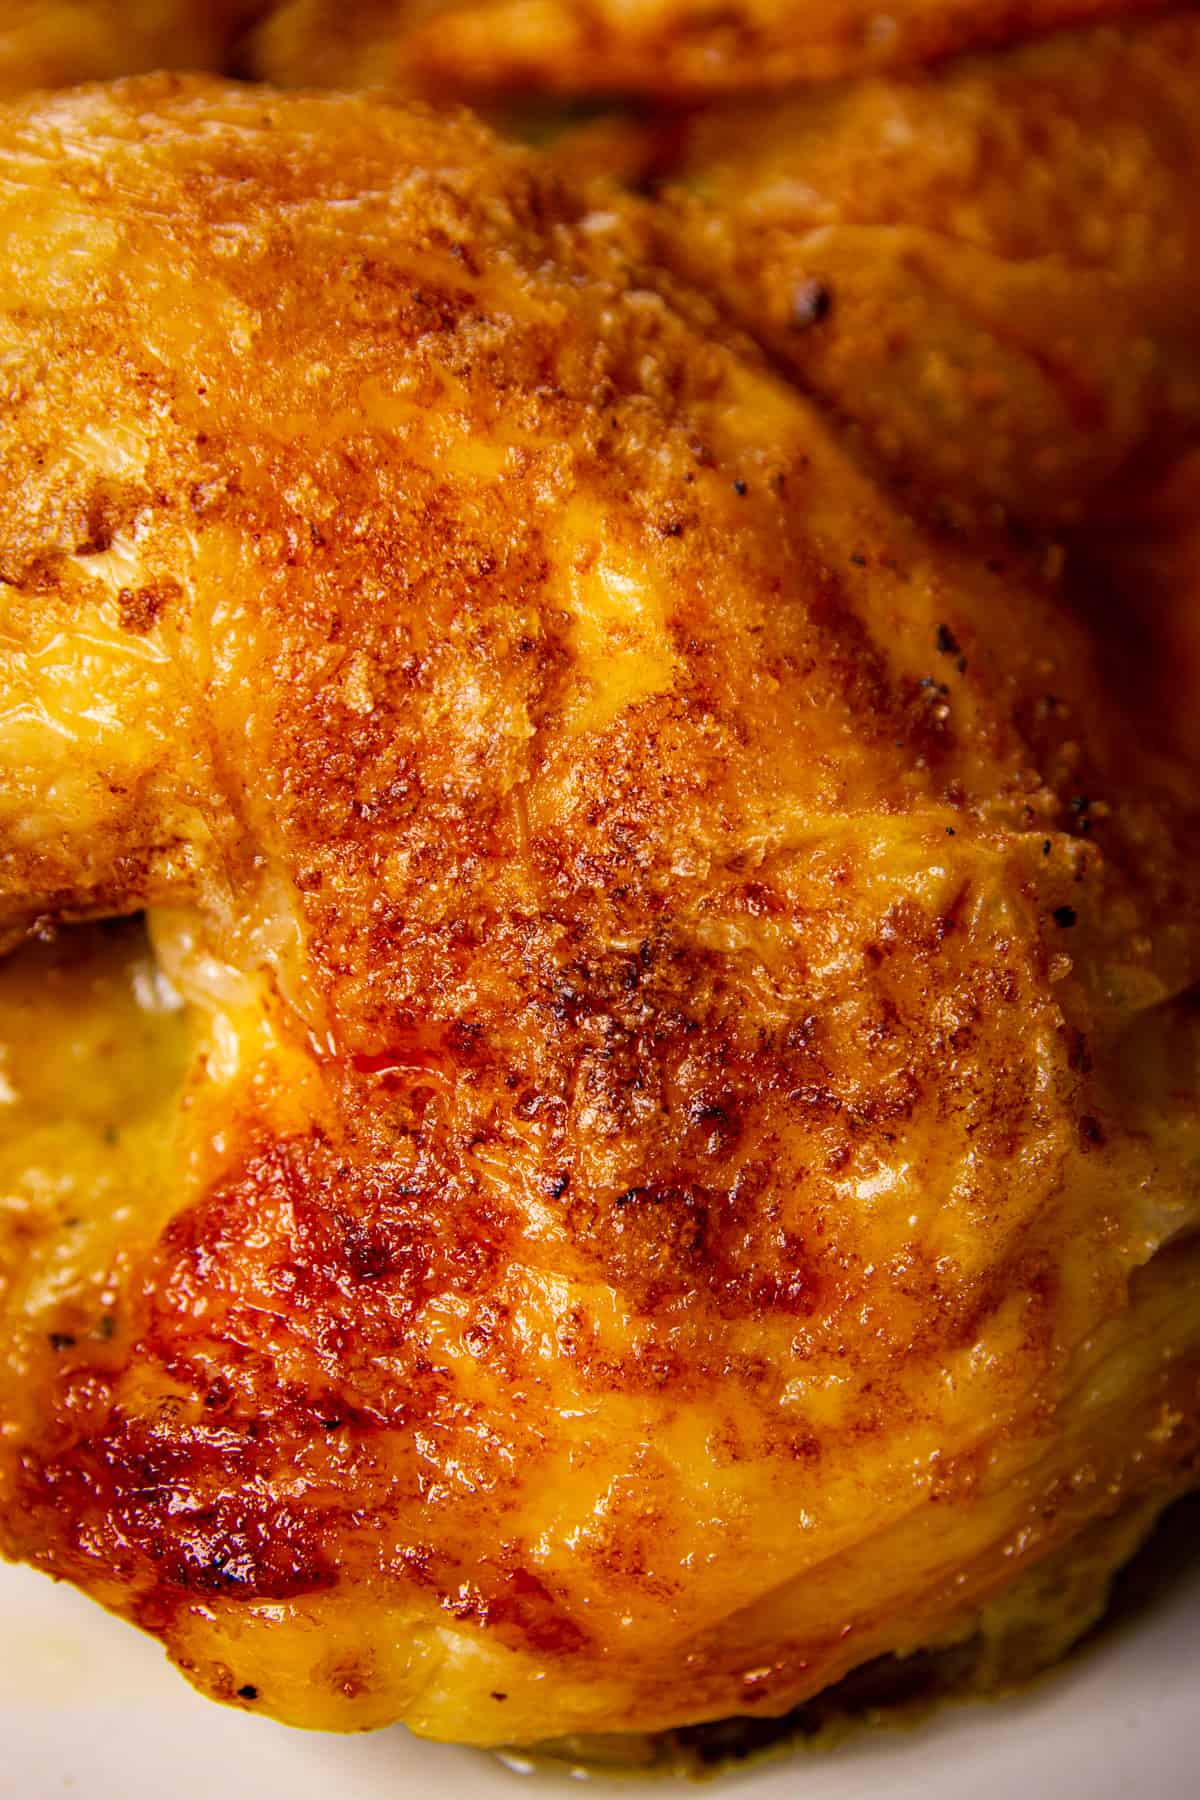 A close up of crispy chicken skin.